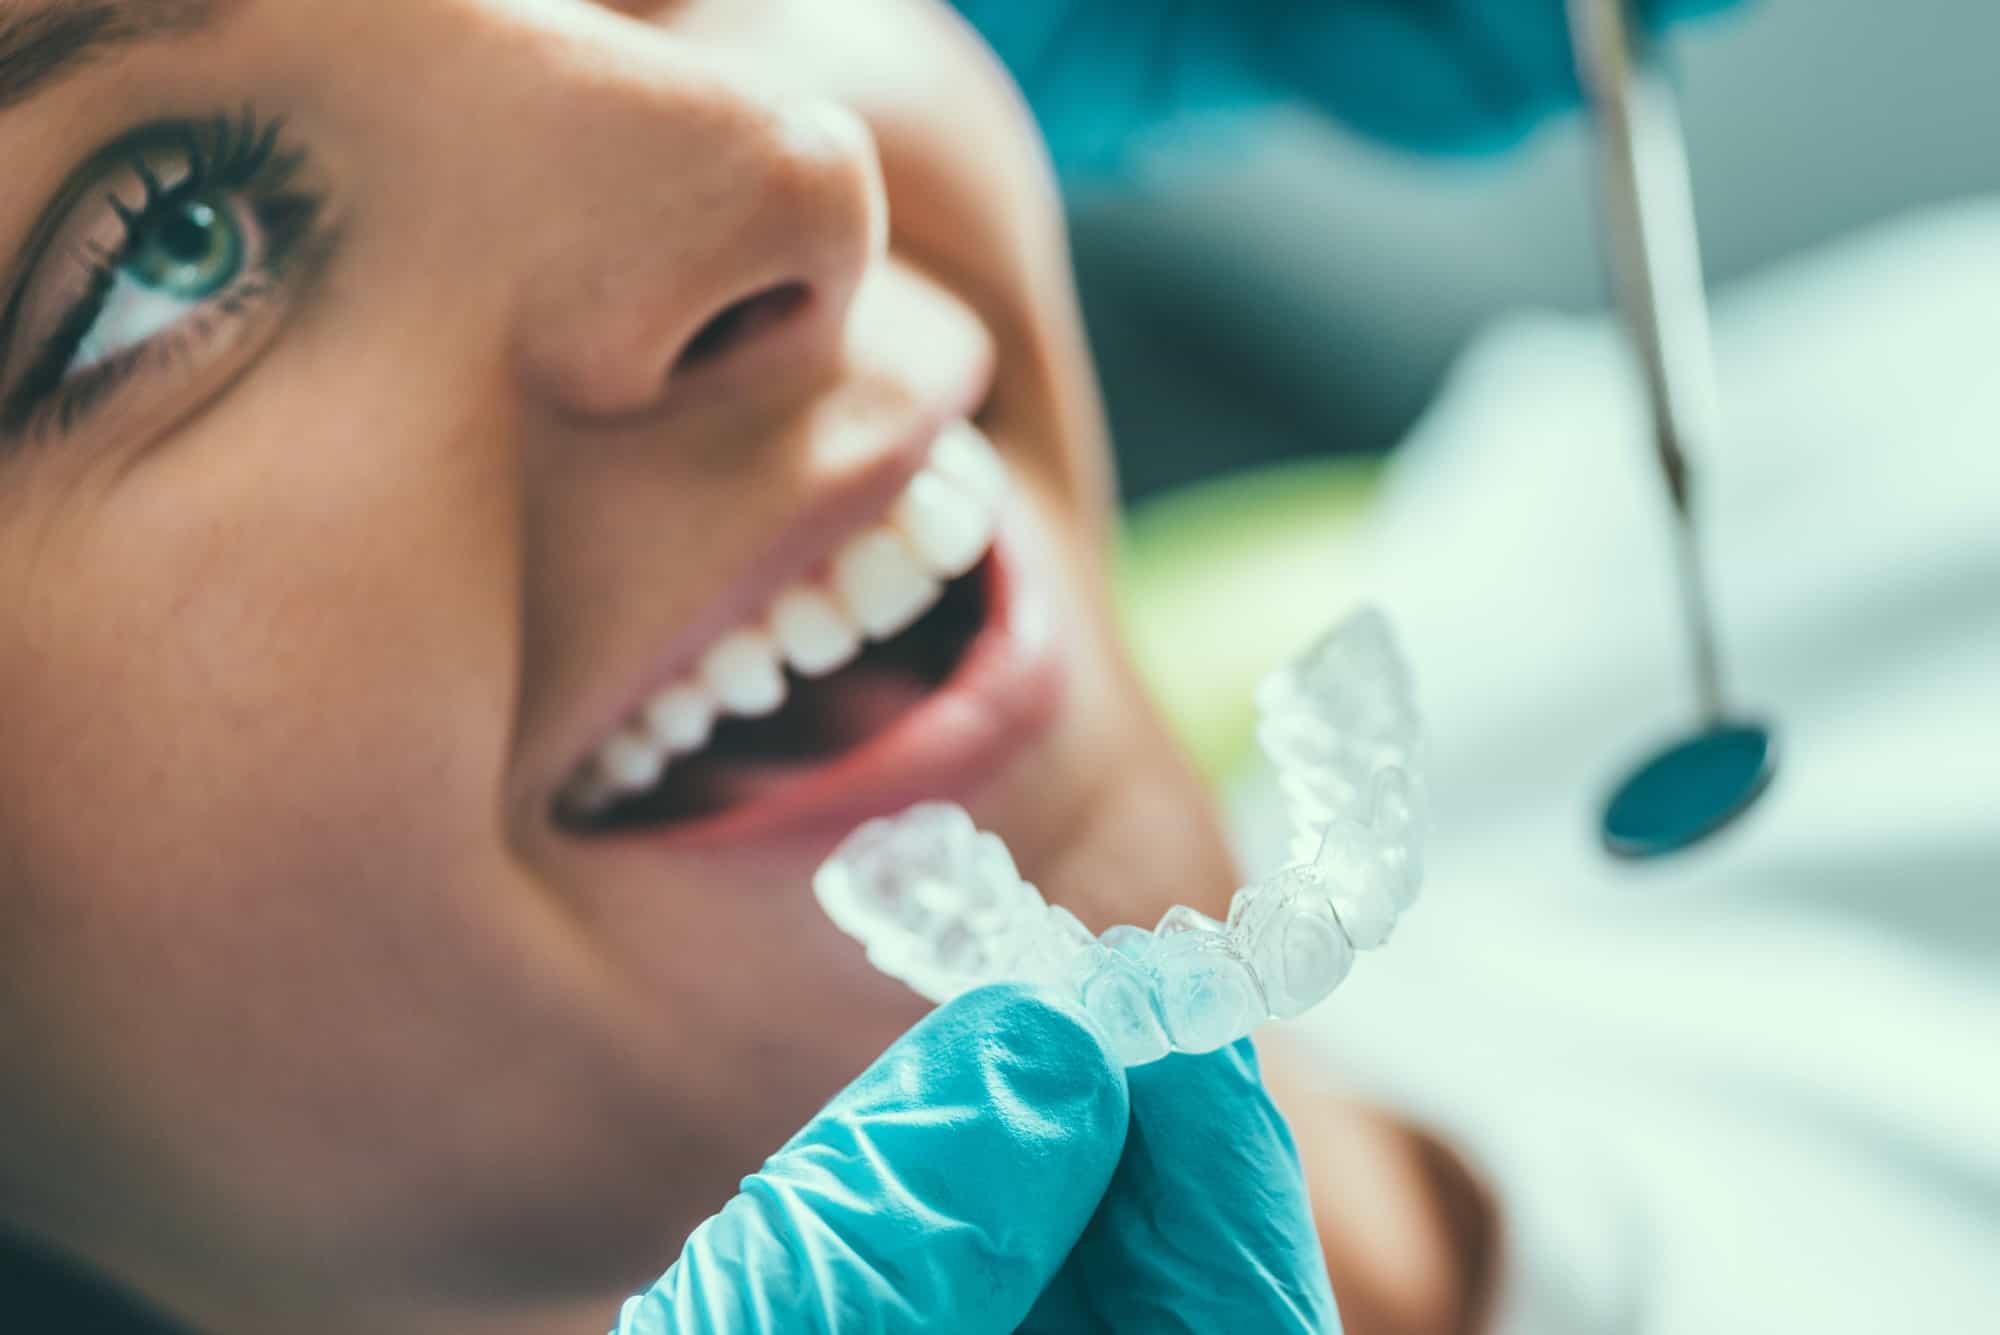 Tooth whitening procedure